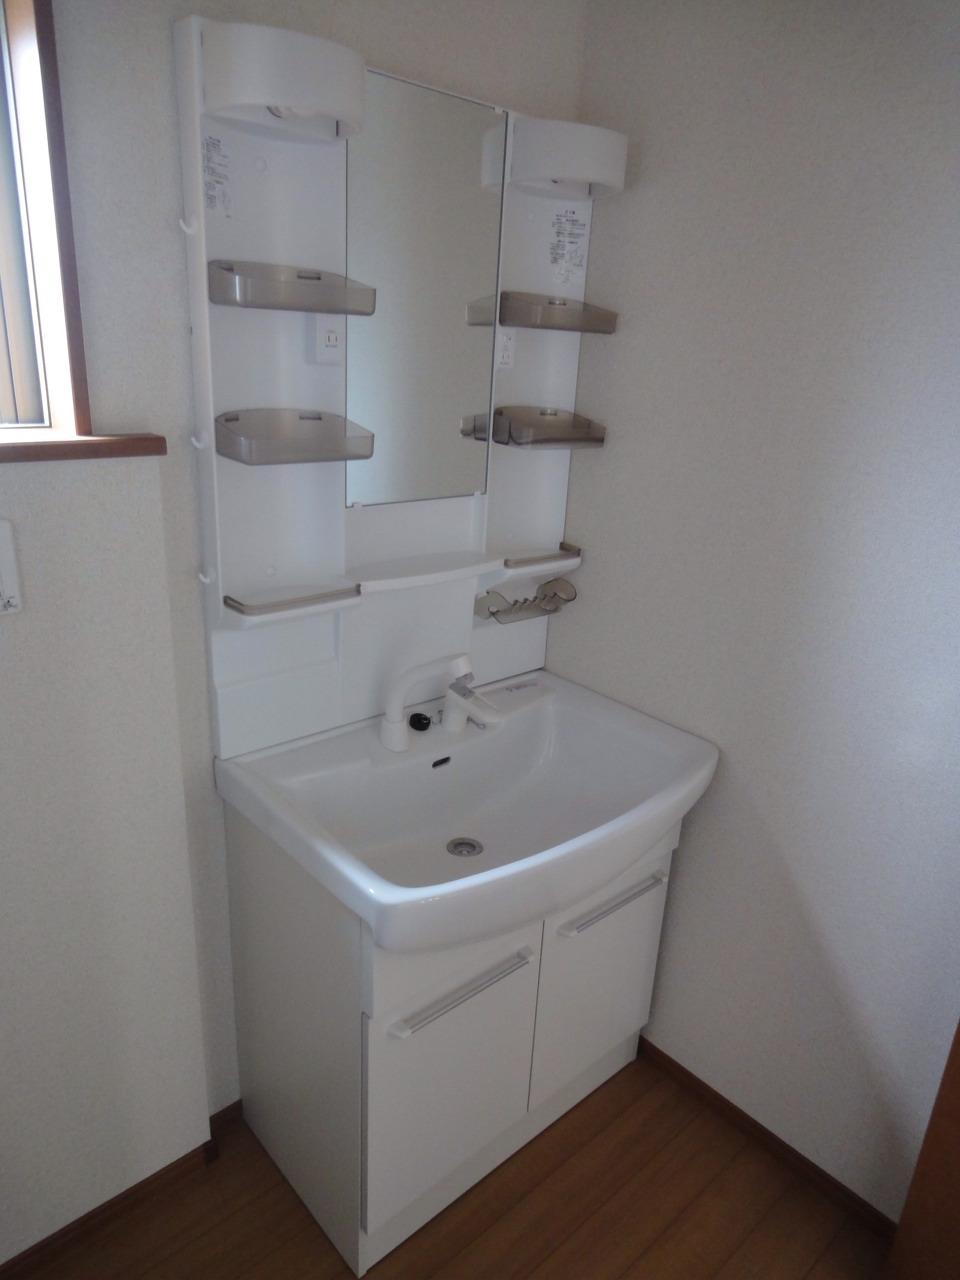 Wash basin, toilet. (2013.11.14 shooting)